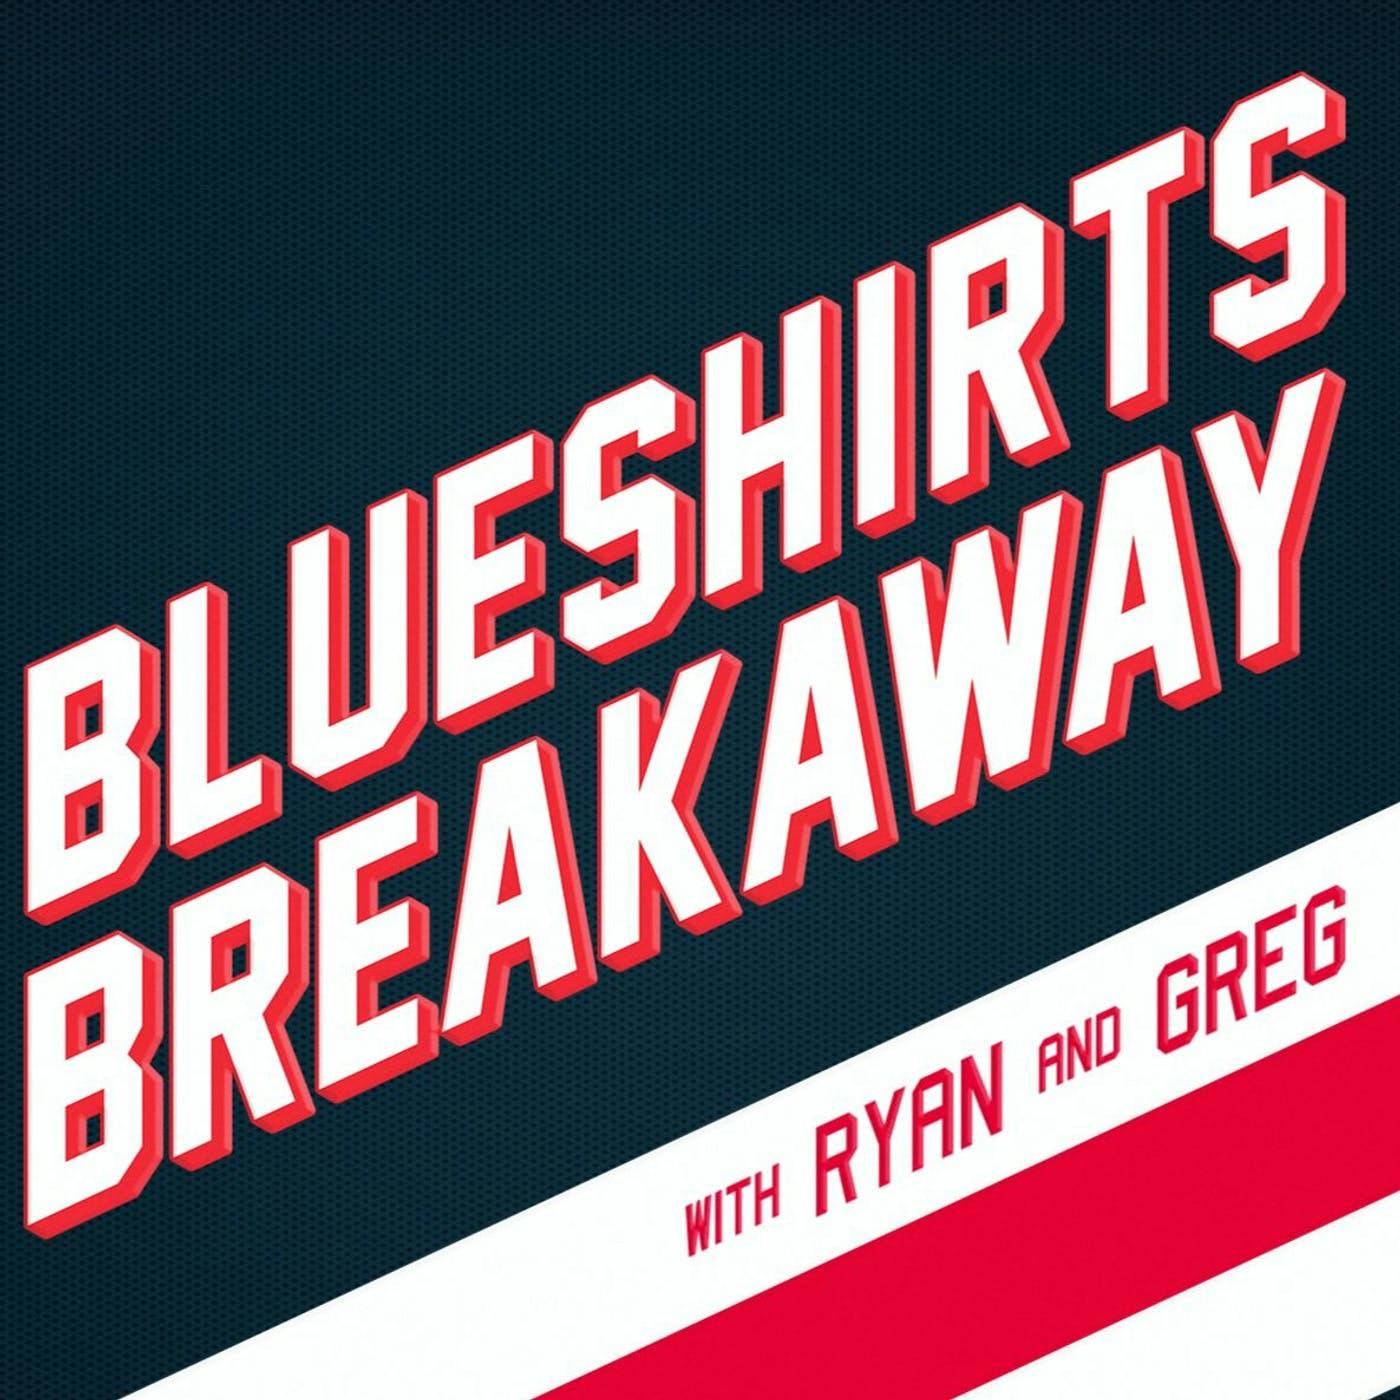 Blueshirts Breakaway EP 86 - Center Depth with Brandon Cohen and EVO preview with LI Joe